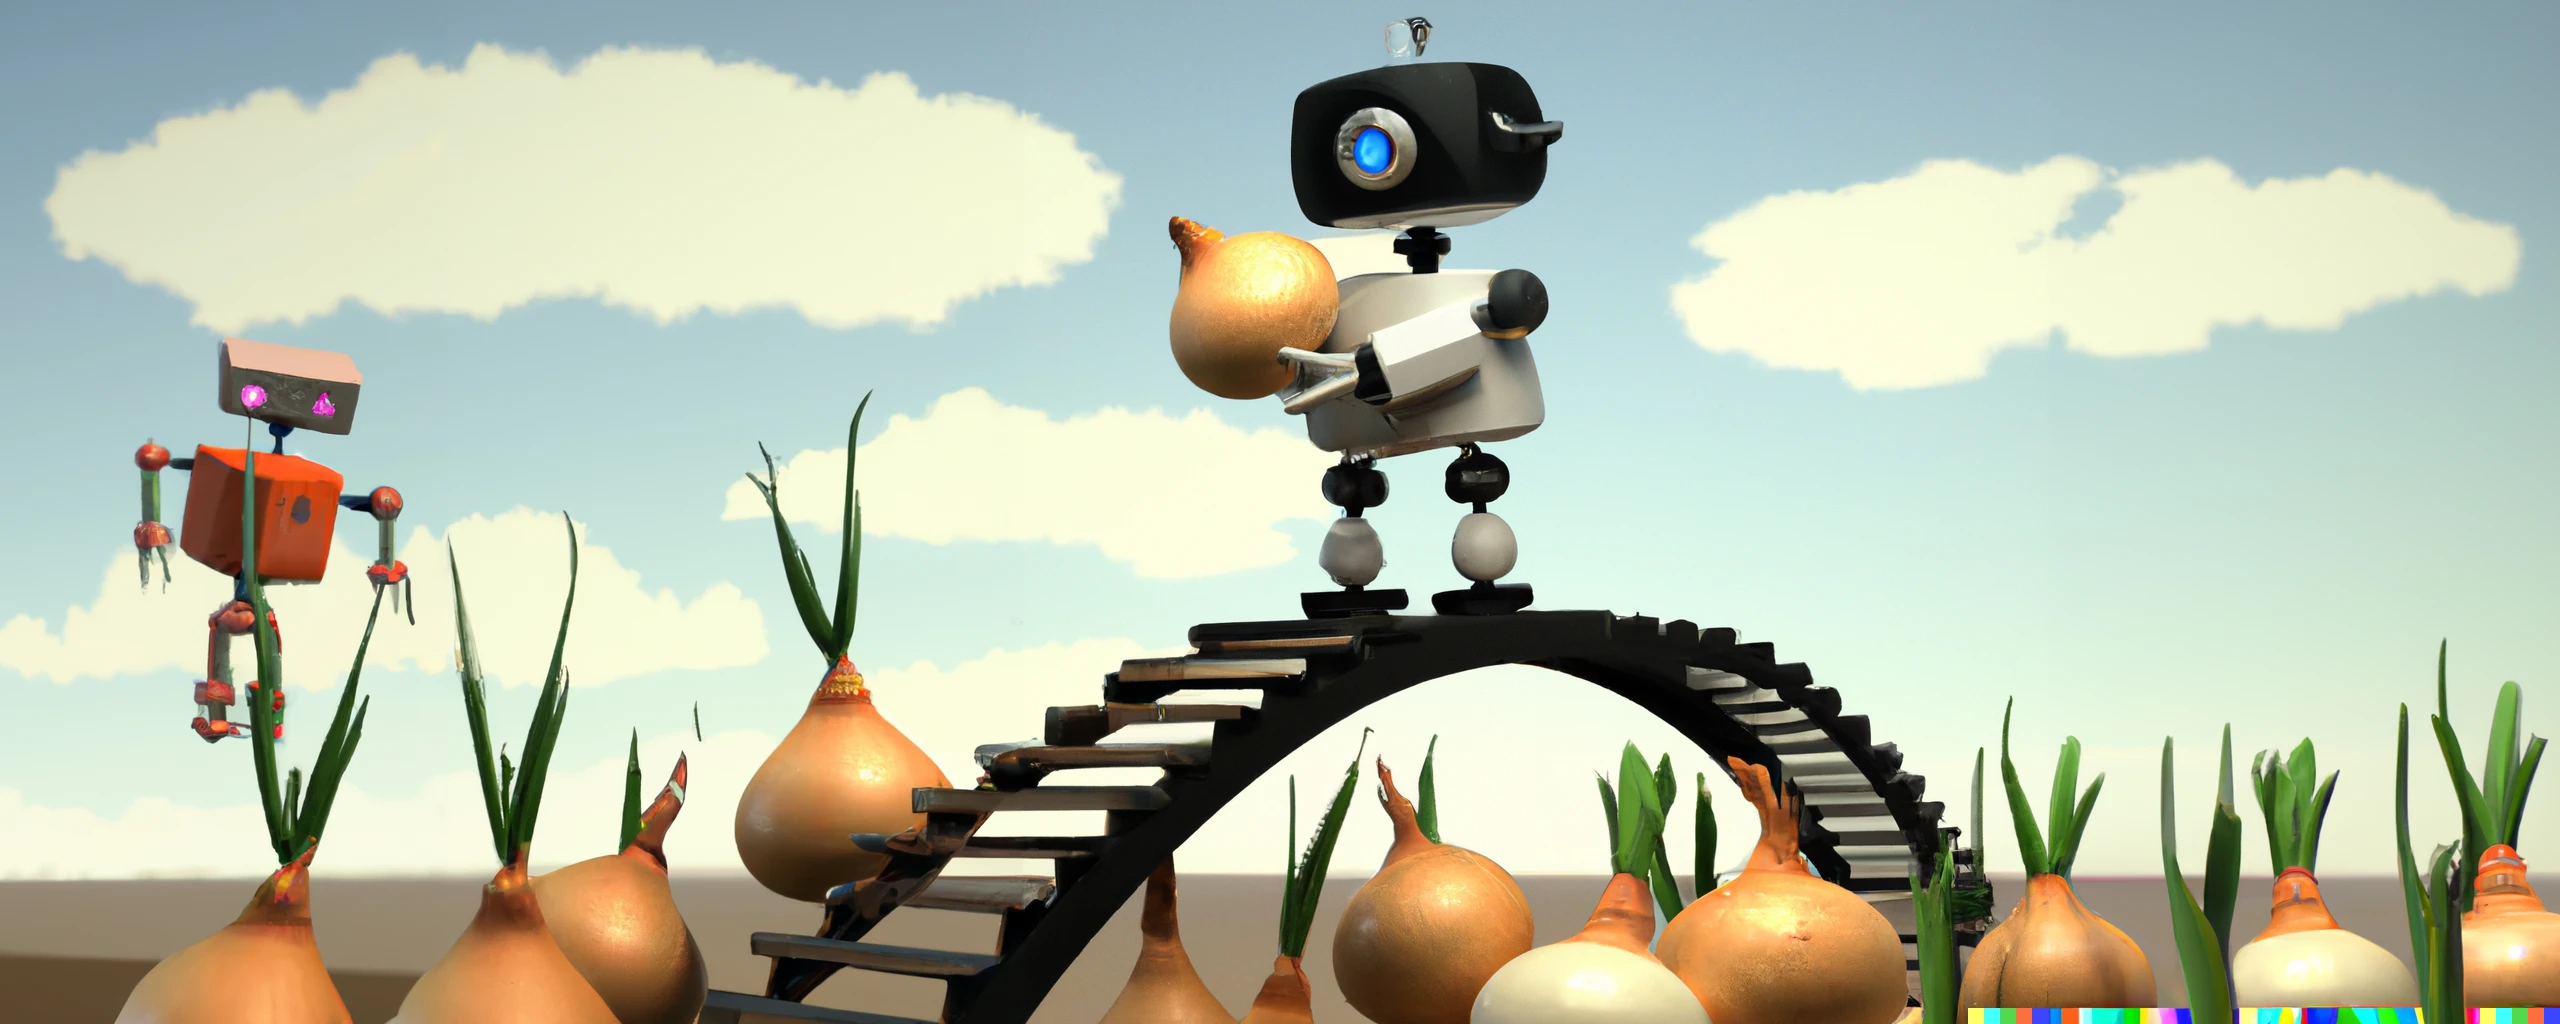 Robots build bridges in a land of onions